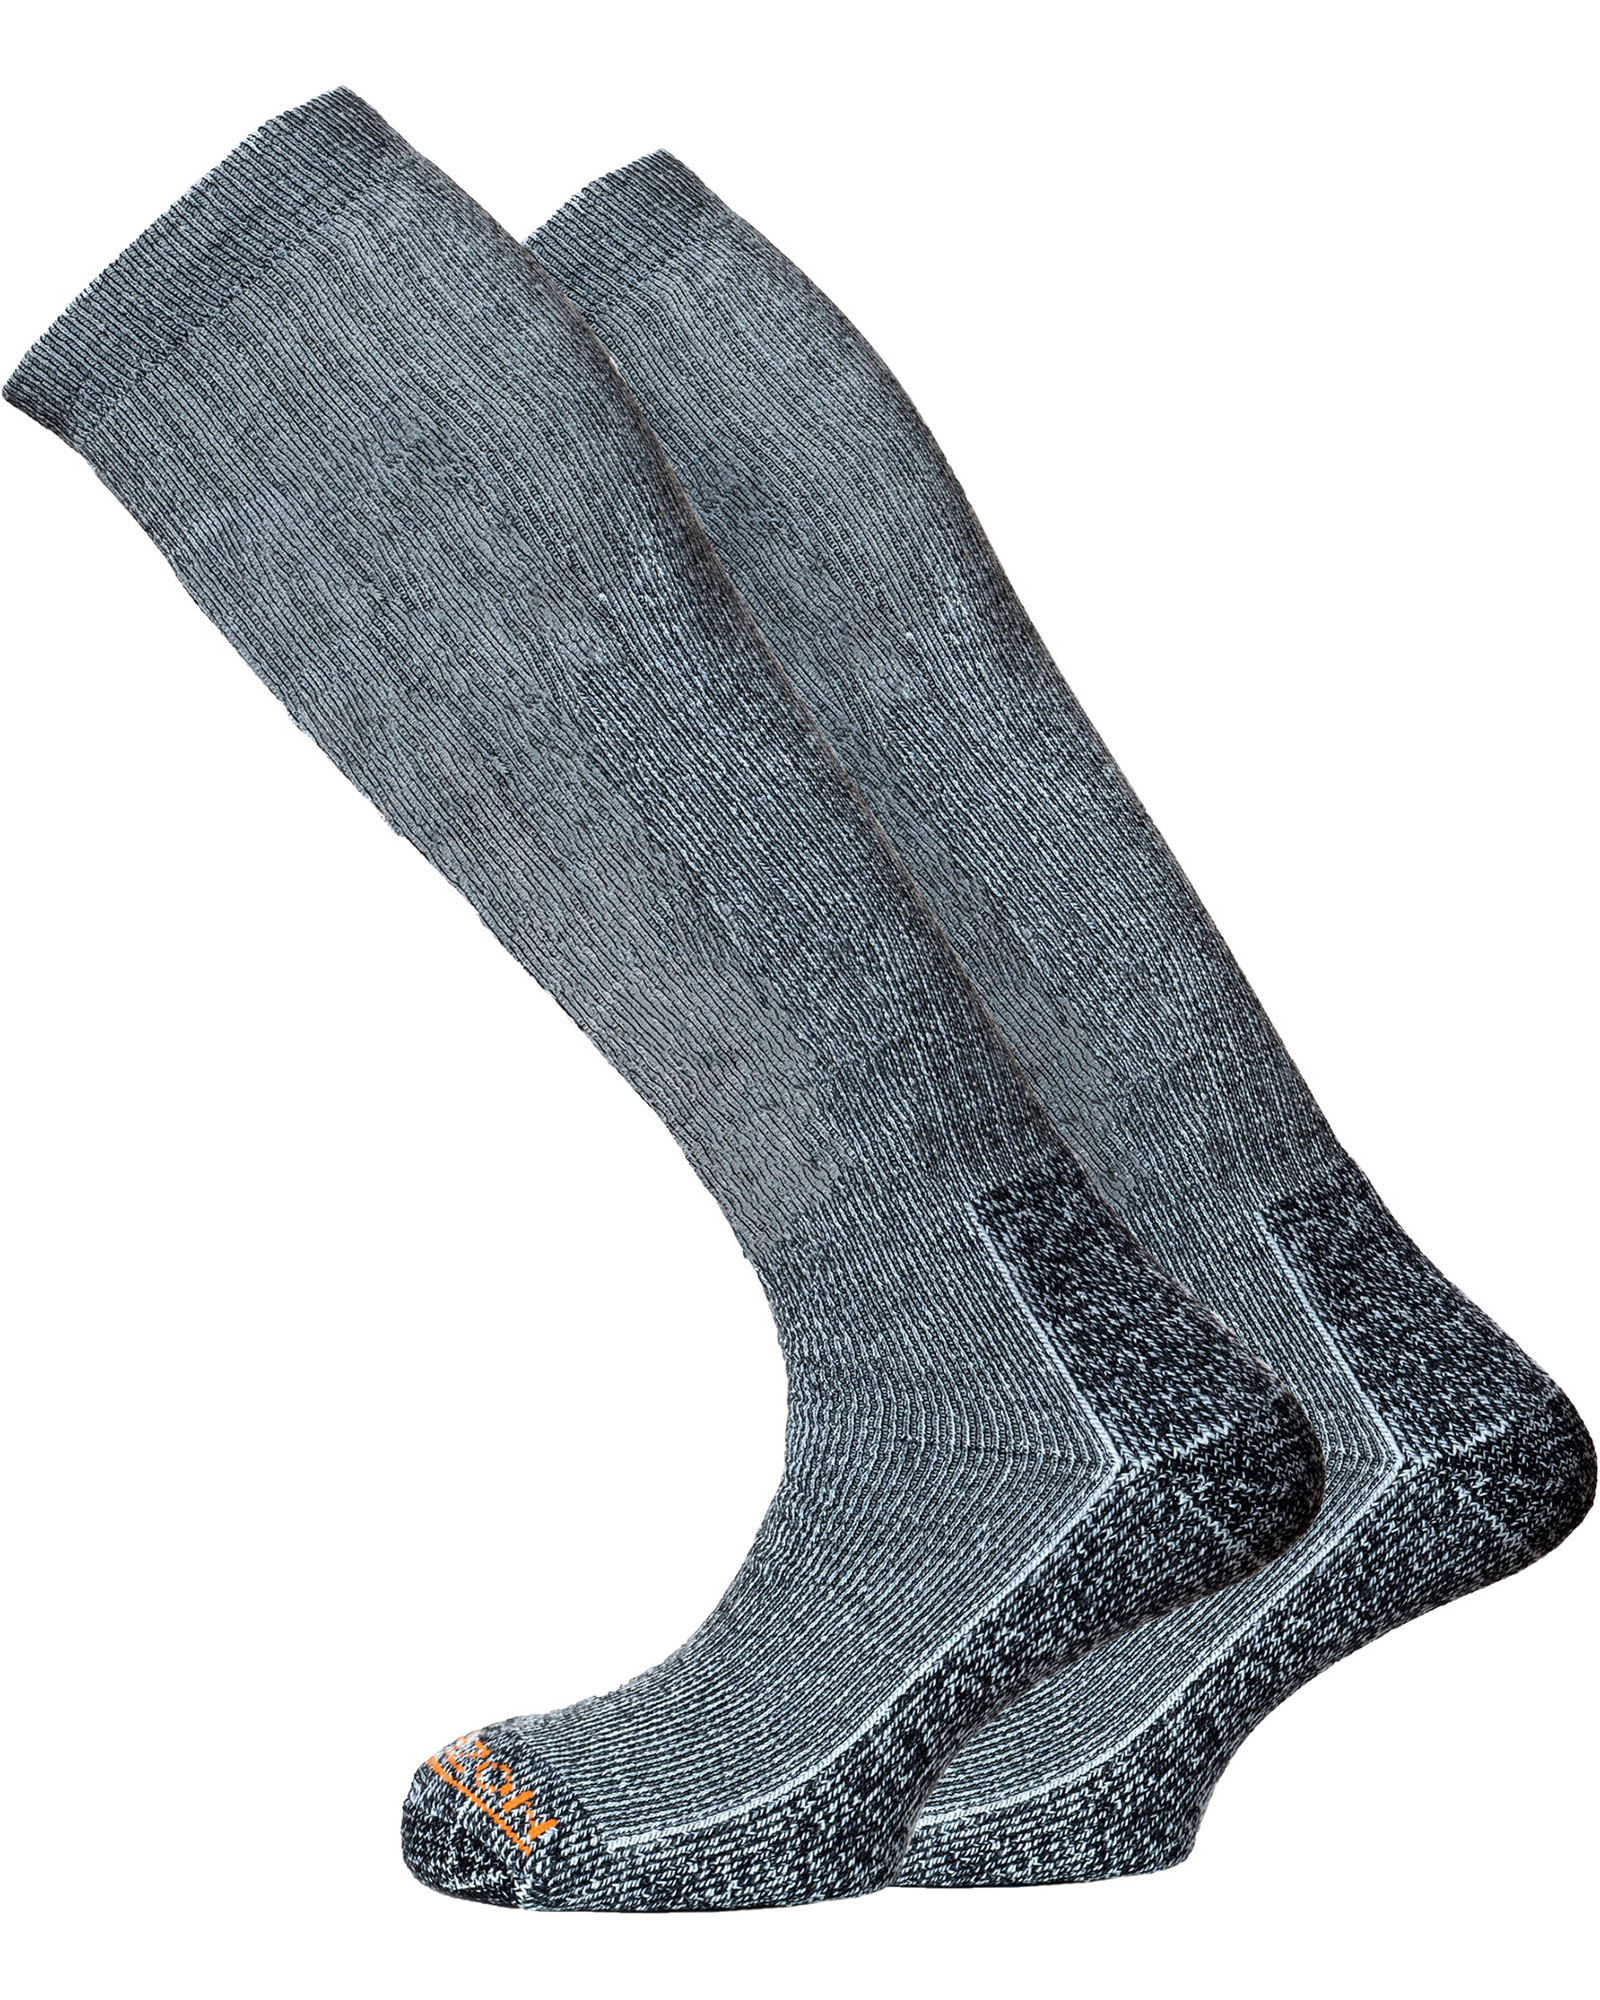 Ellis Brigham Wintersport Ski Socks   Twin Pack - Grey S/M